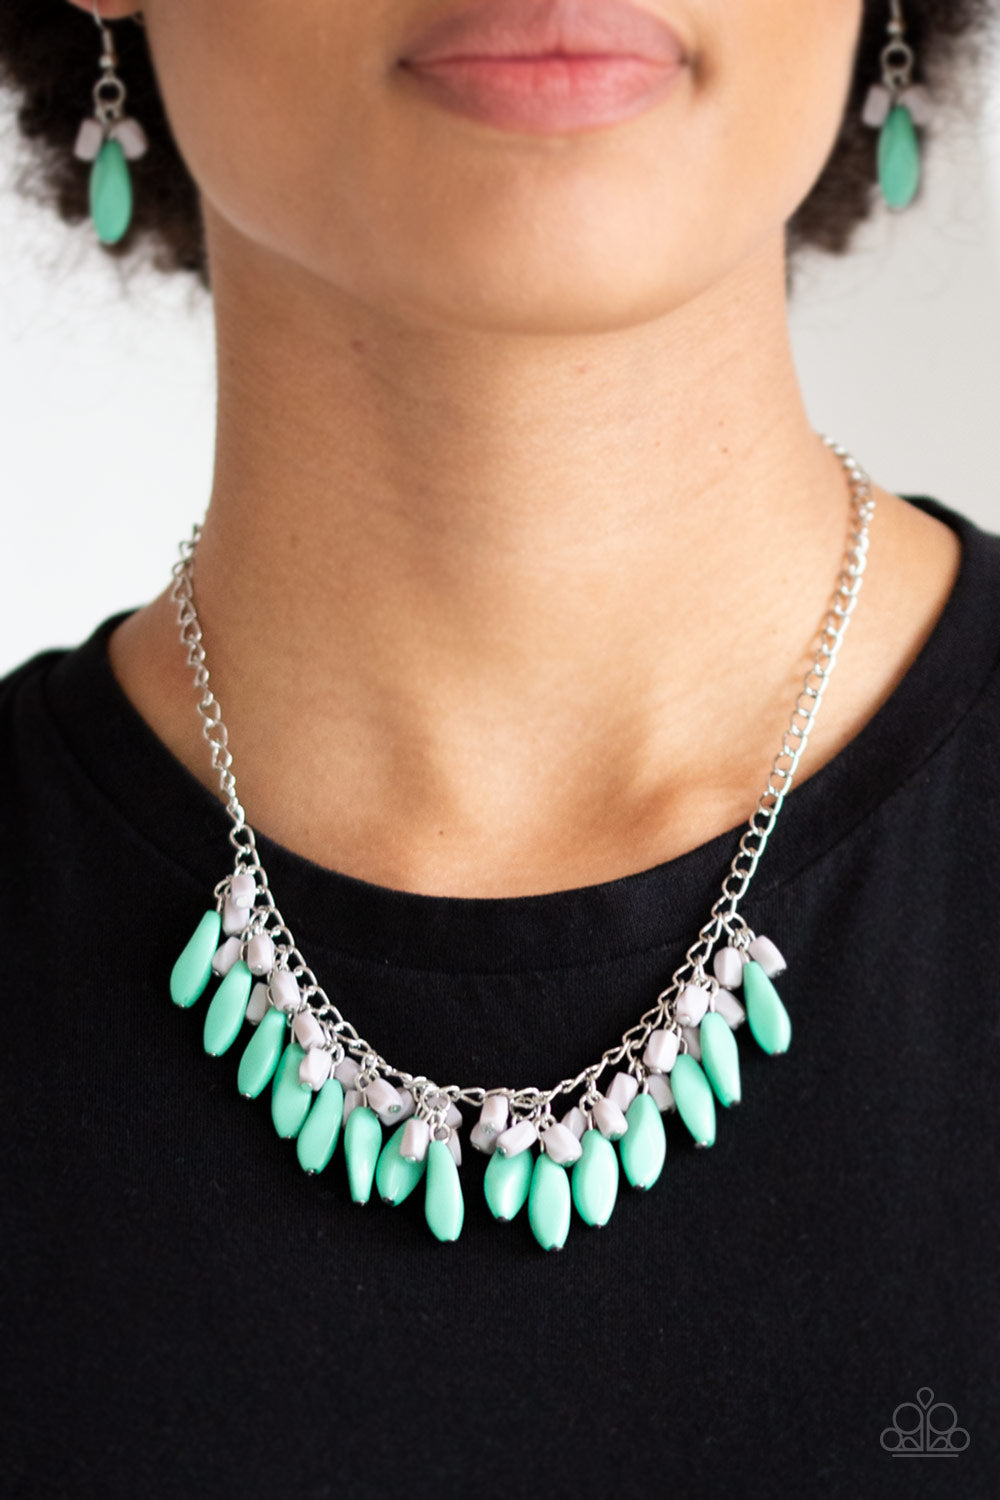 Paparazzi Bead Binge - Green Beads - Silver Necklace & Earrings - $5 Jewelry with Ashley Swint